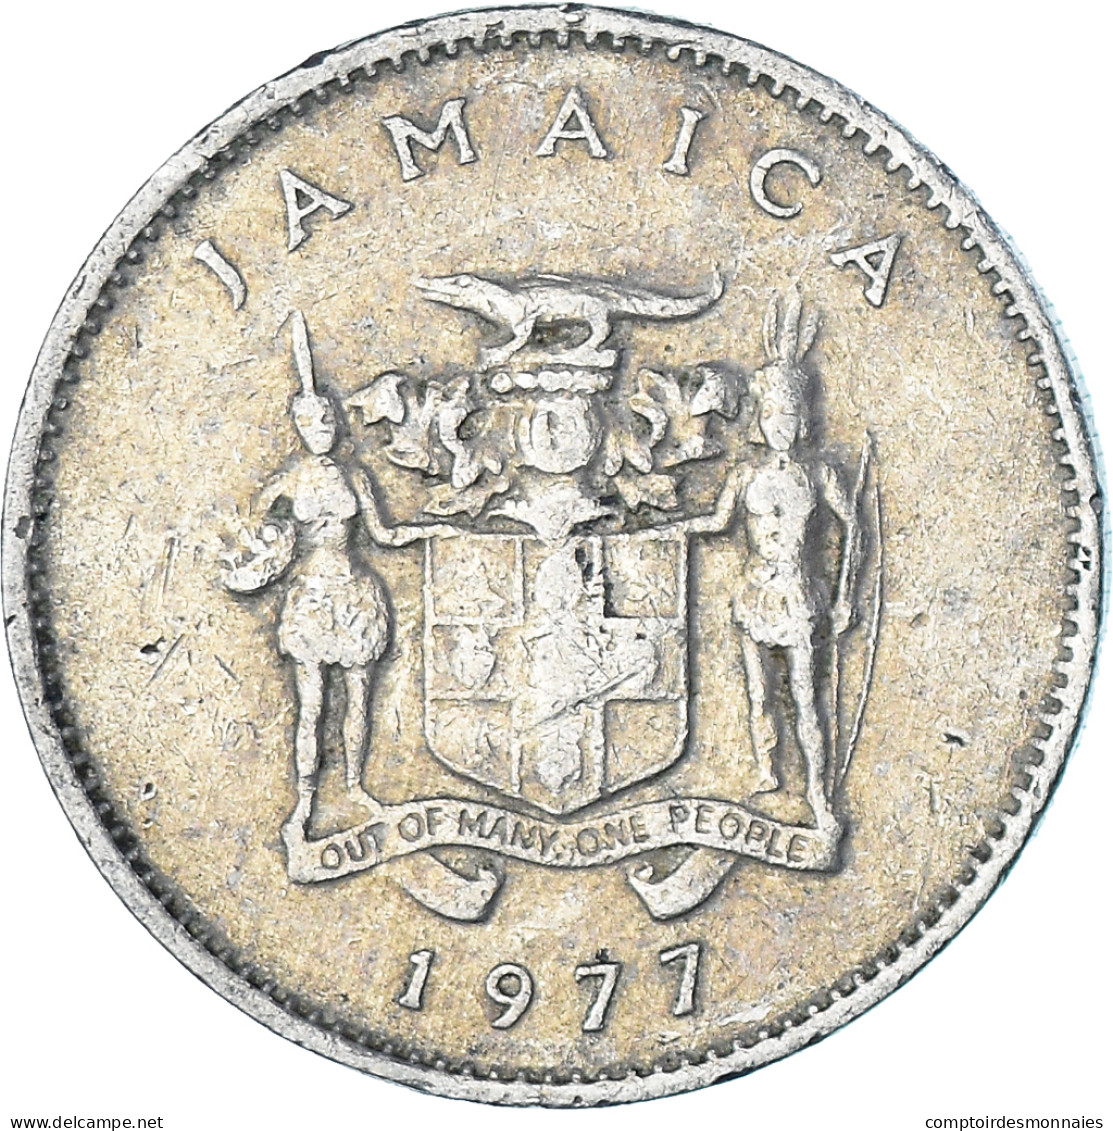 Monnaie, Jamaïque, 10 Cents, 1977 - Jamaica